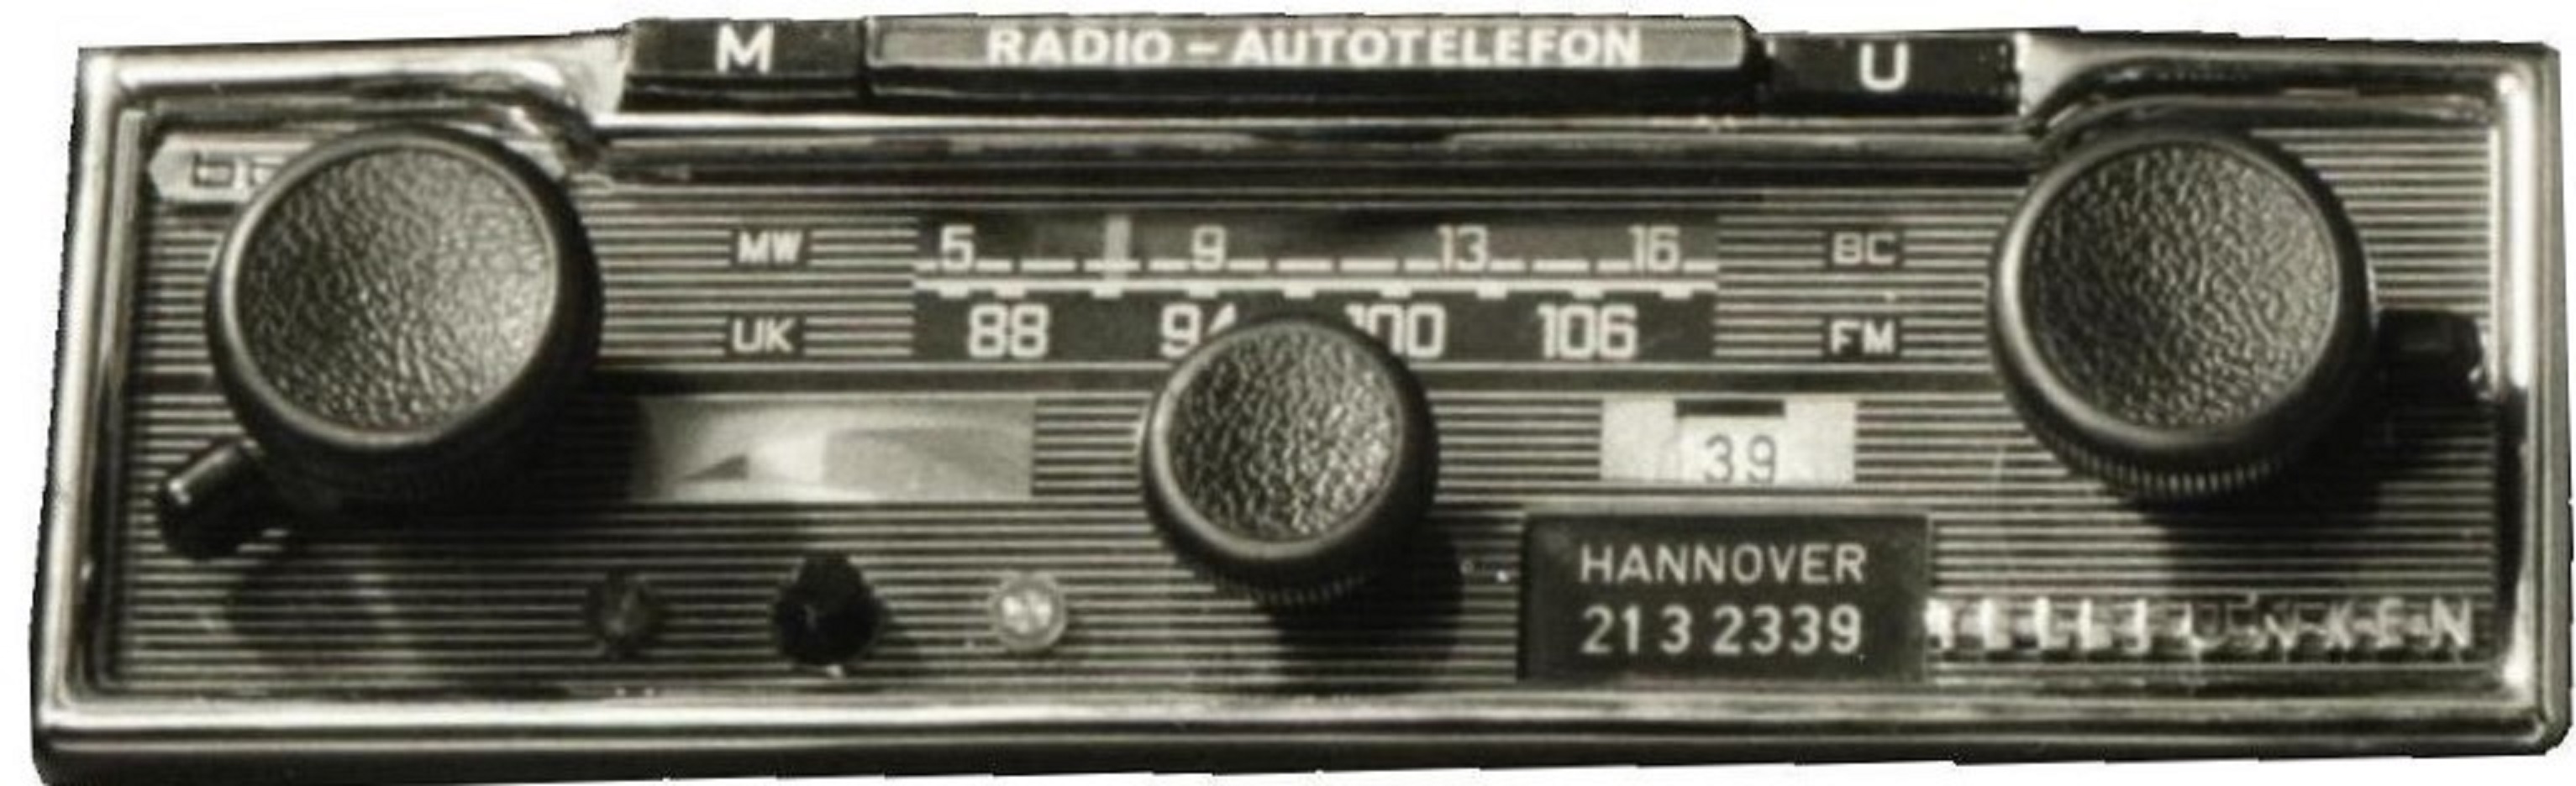 becker Radiotelefon Prototyp